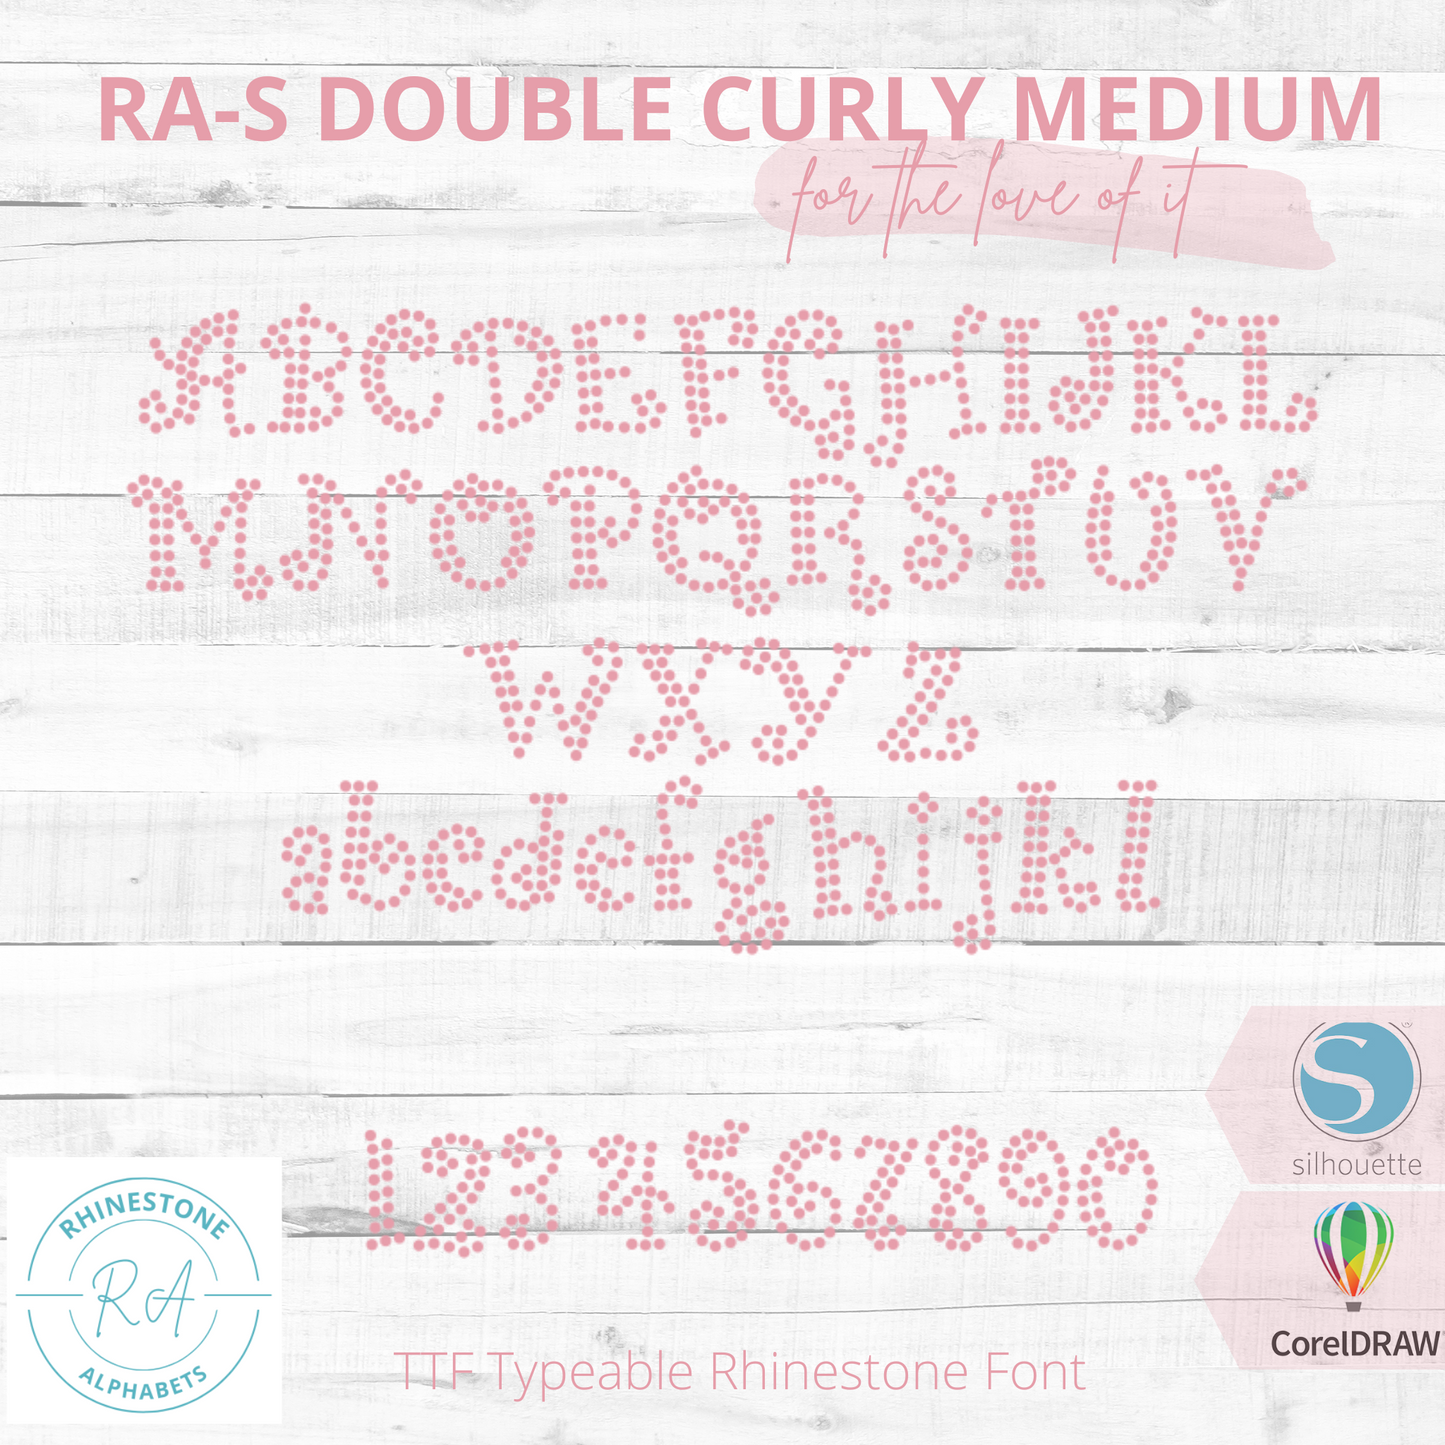 RA-S Double Curly Font Medium - RhinestoneAlphabets